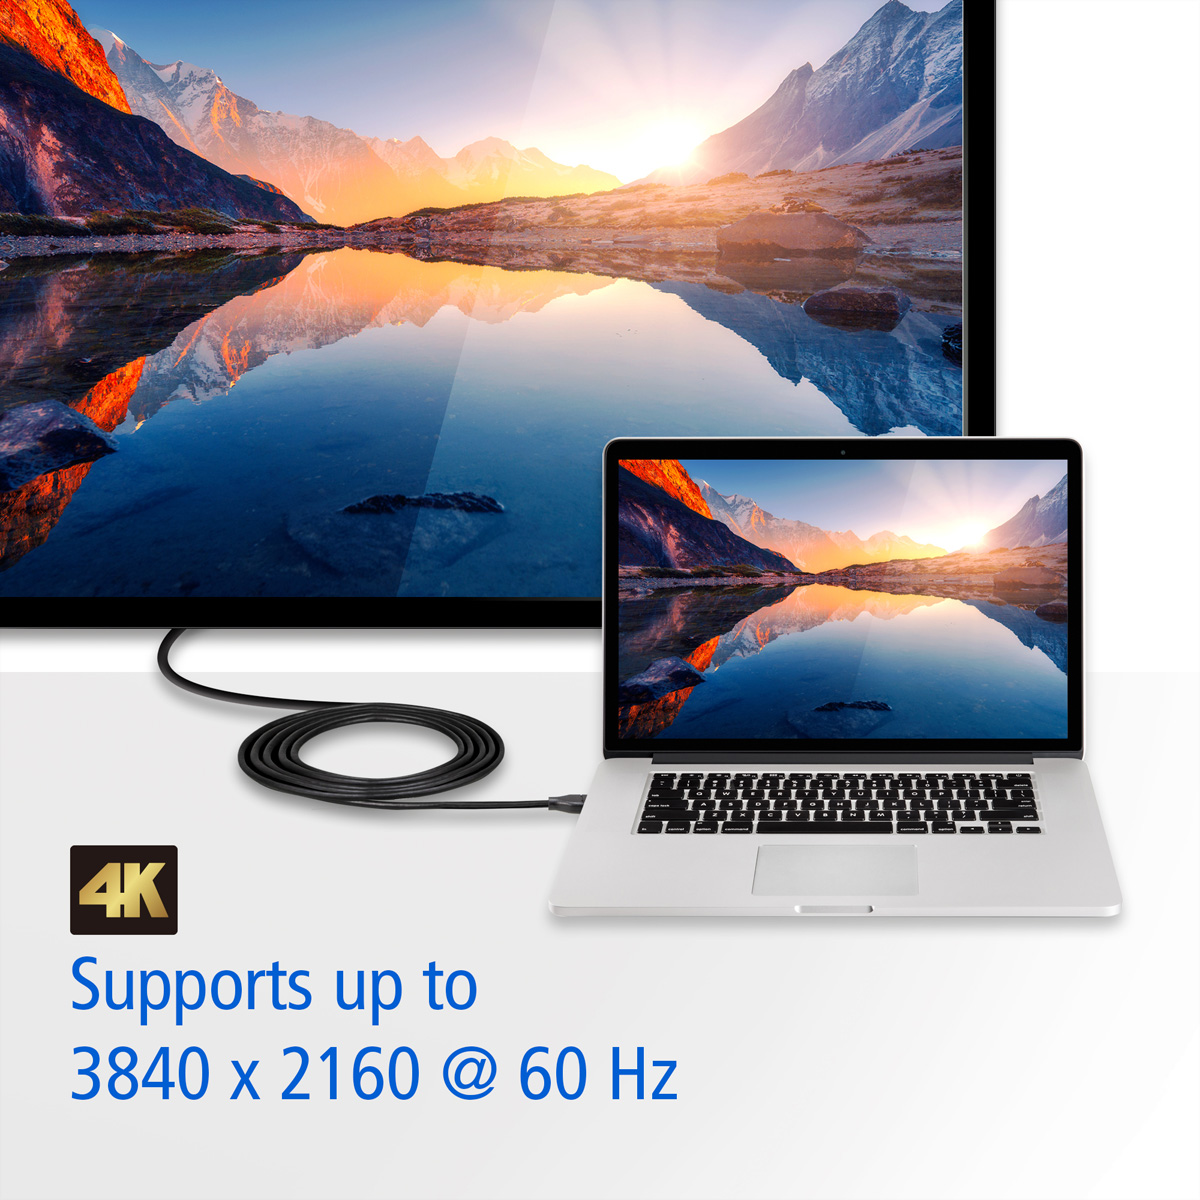 ATEN UC3238 USB-C to Kabel USB-HDMI Adapter HDMI 4K